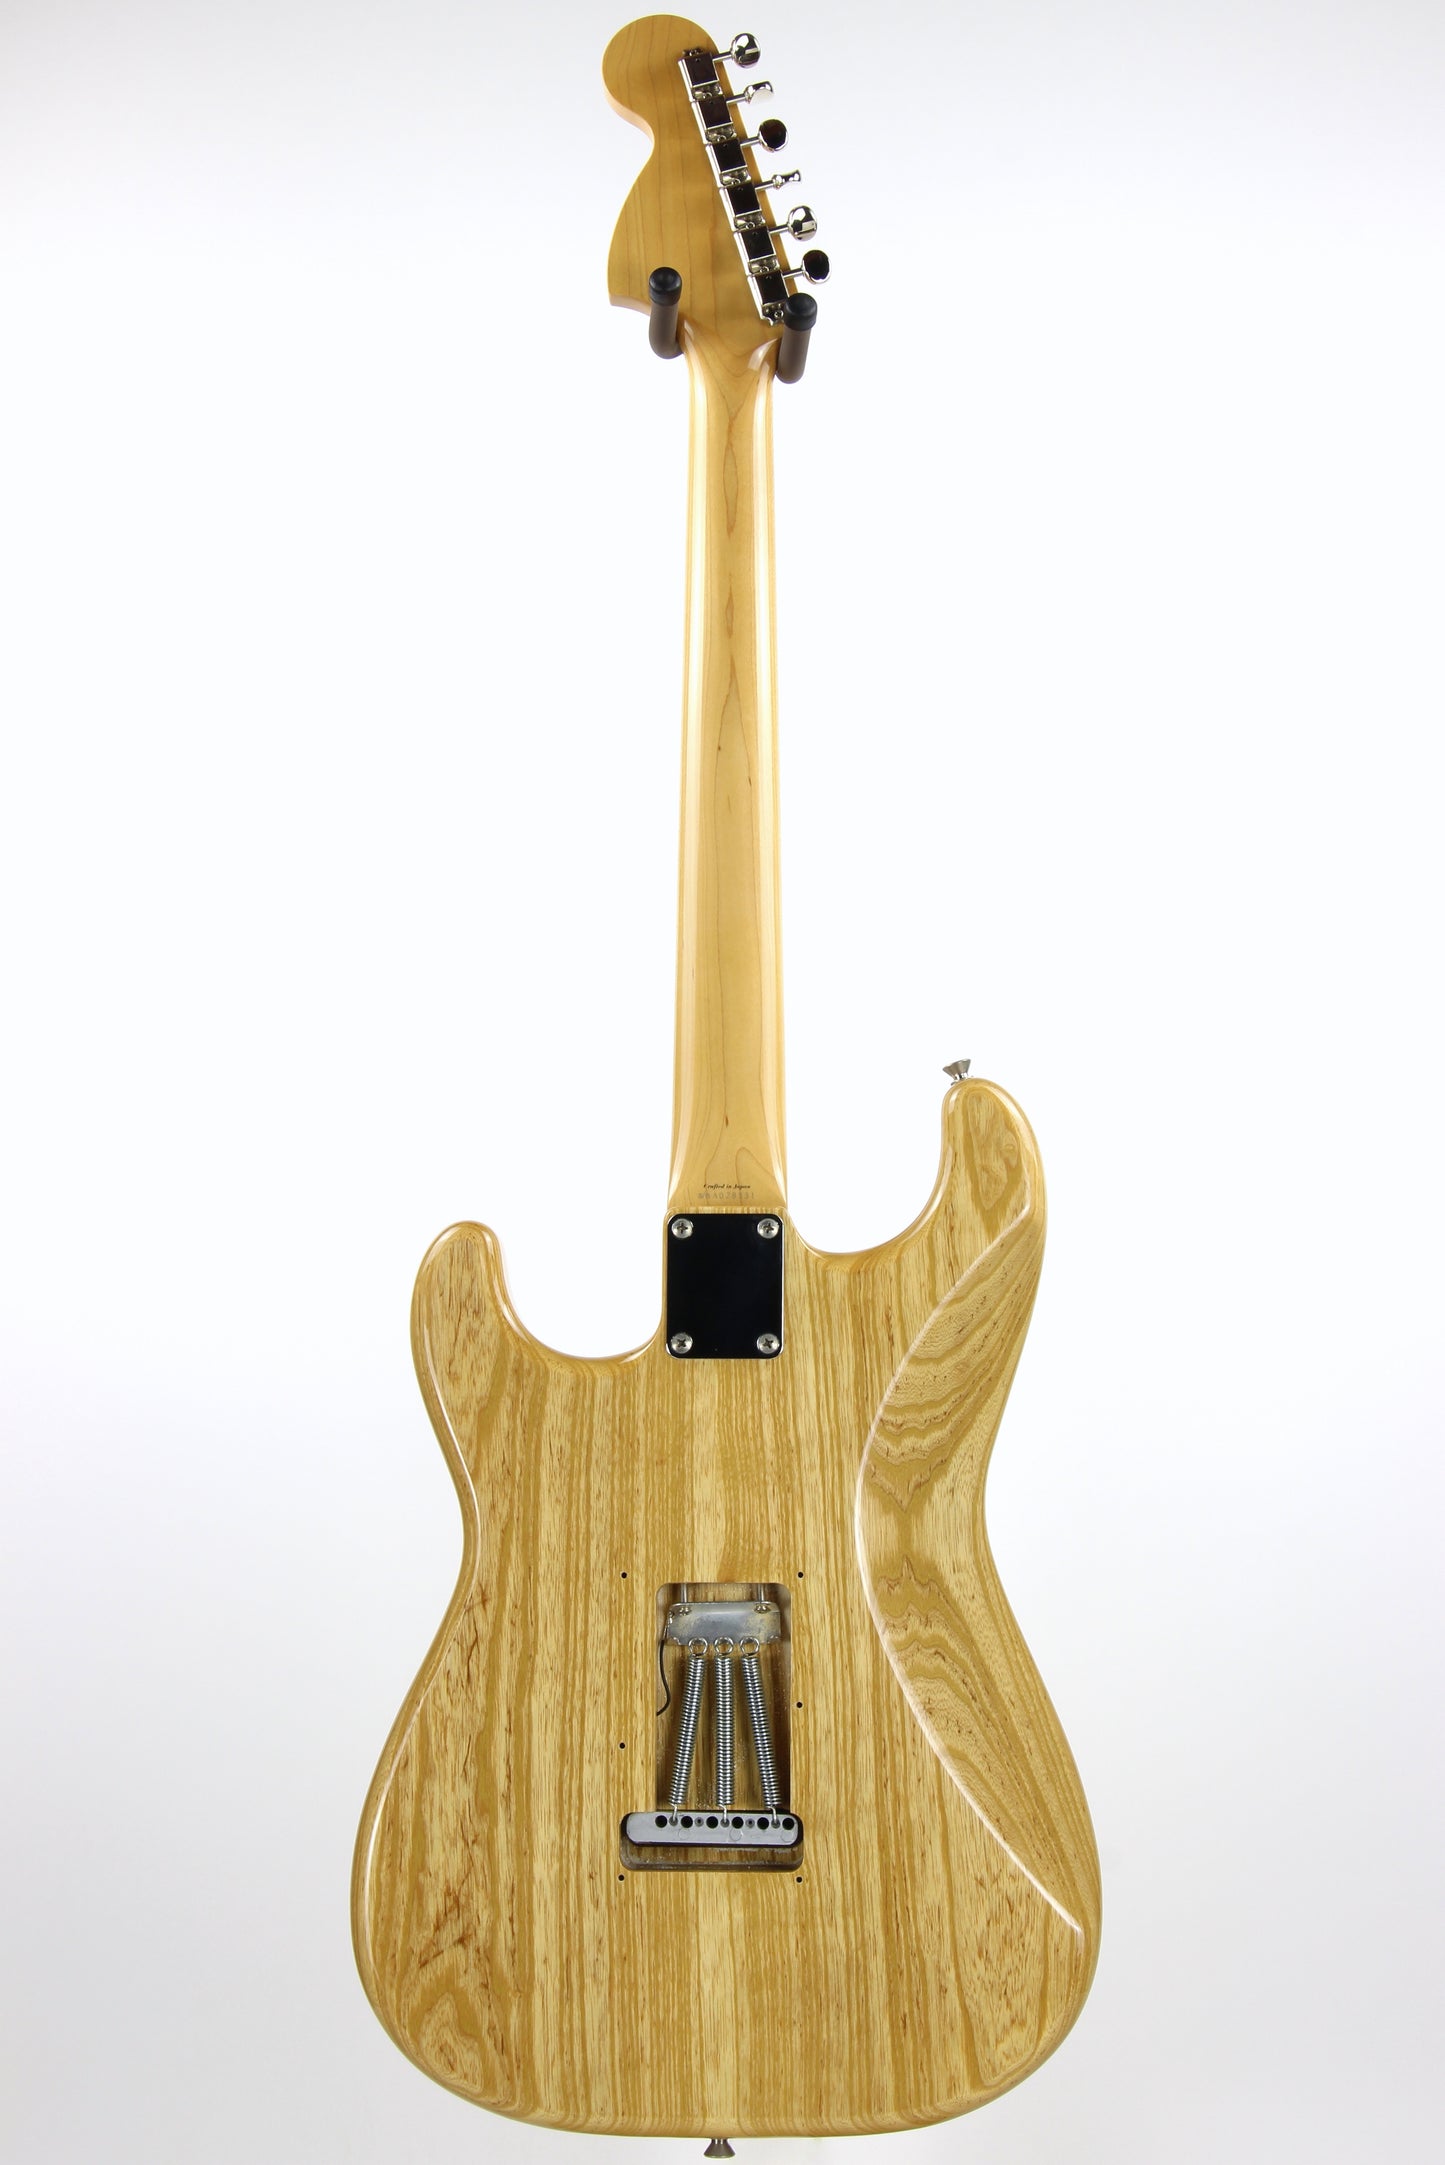 1997 Fender Japan '67 Stratocaster CIJ -- Natural Ash Body ST67 Maple Cap Neck, Big Headstock!